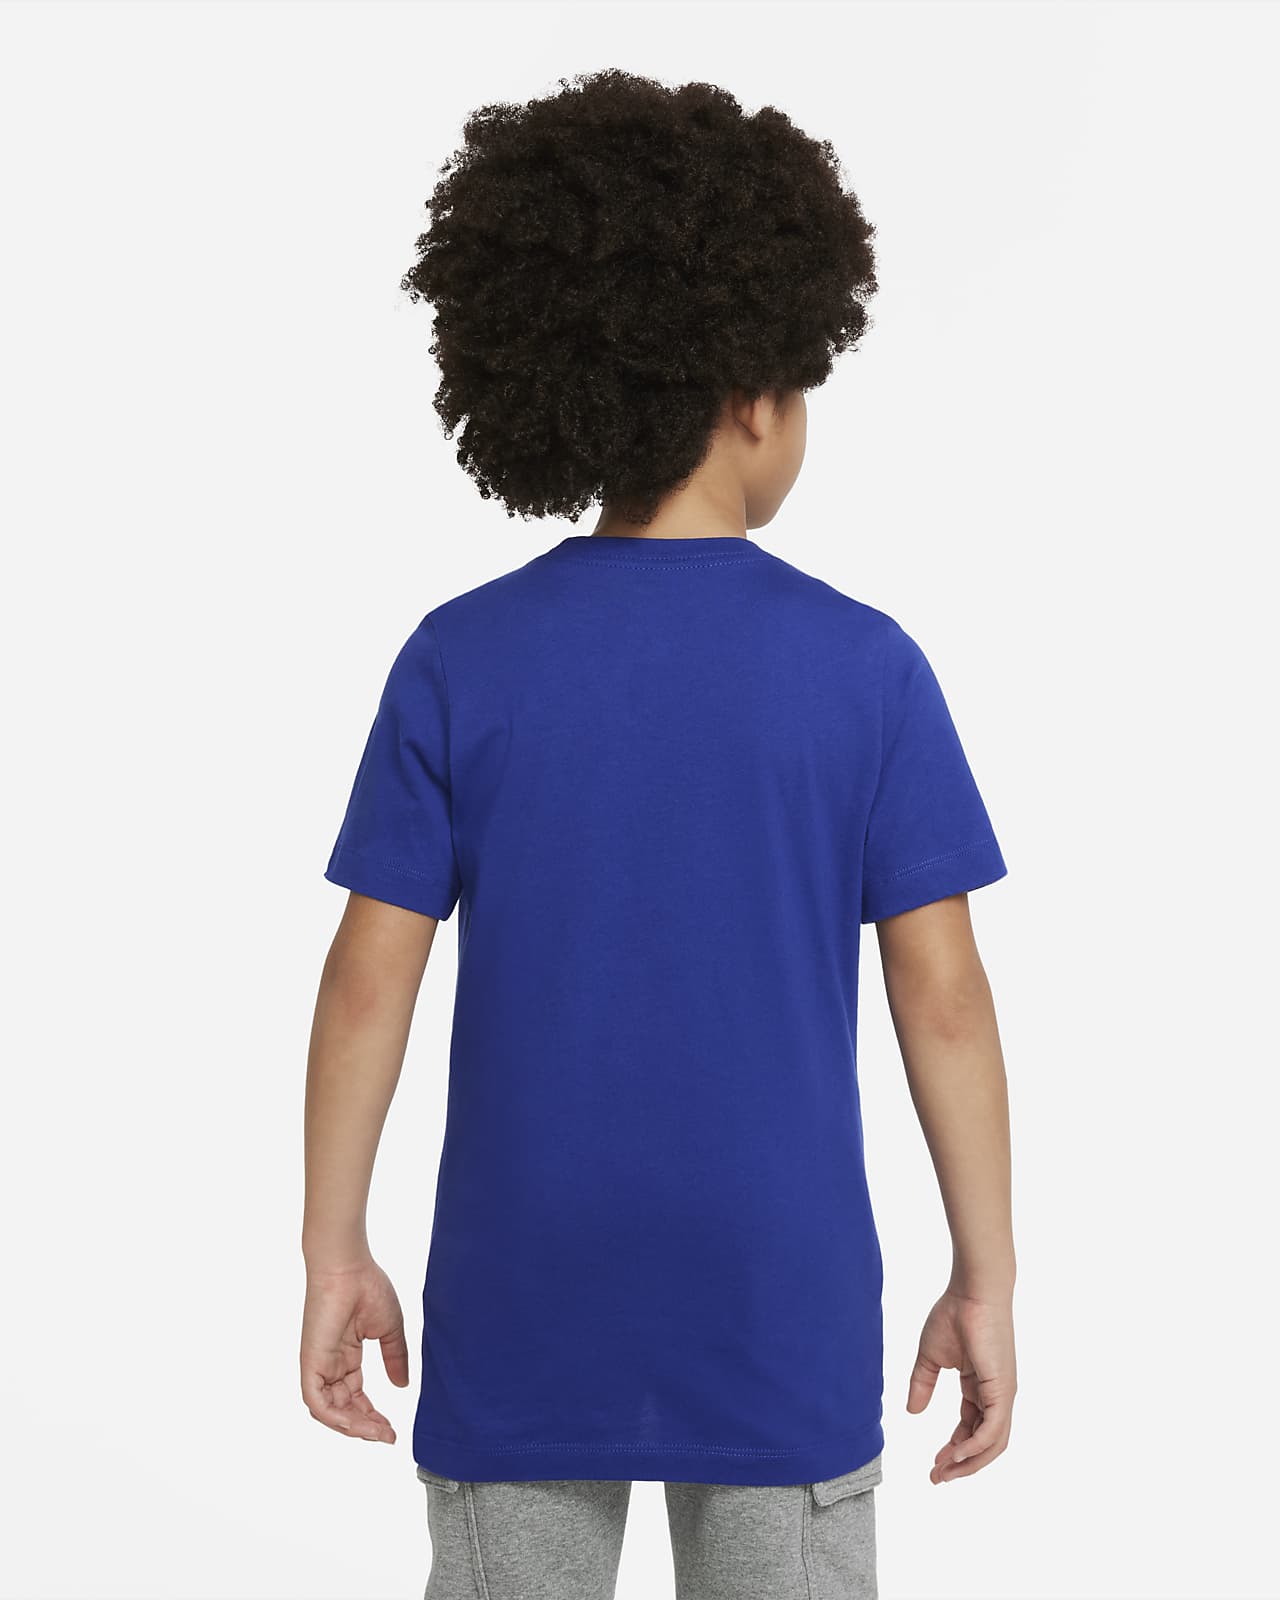 Chelsea FC Swoosh Camiseta de fútbol - Niño/a. Nike ES